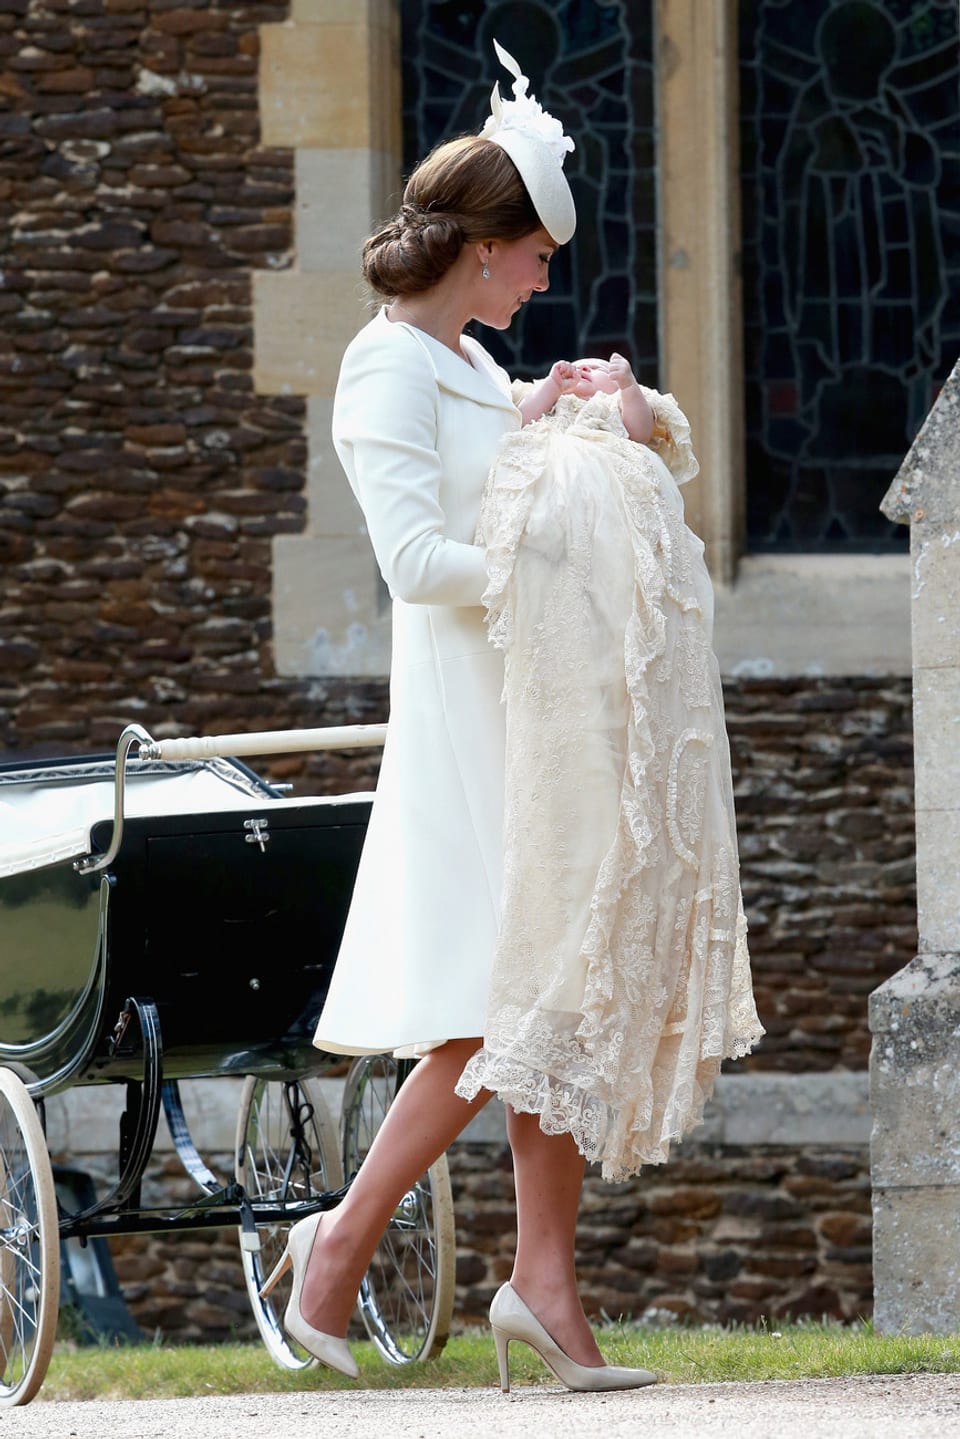 Kate mit Baby in Armen.